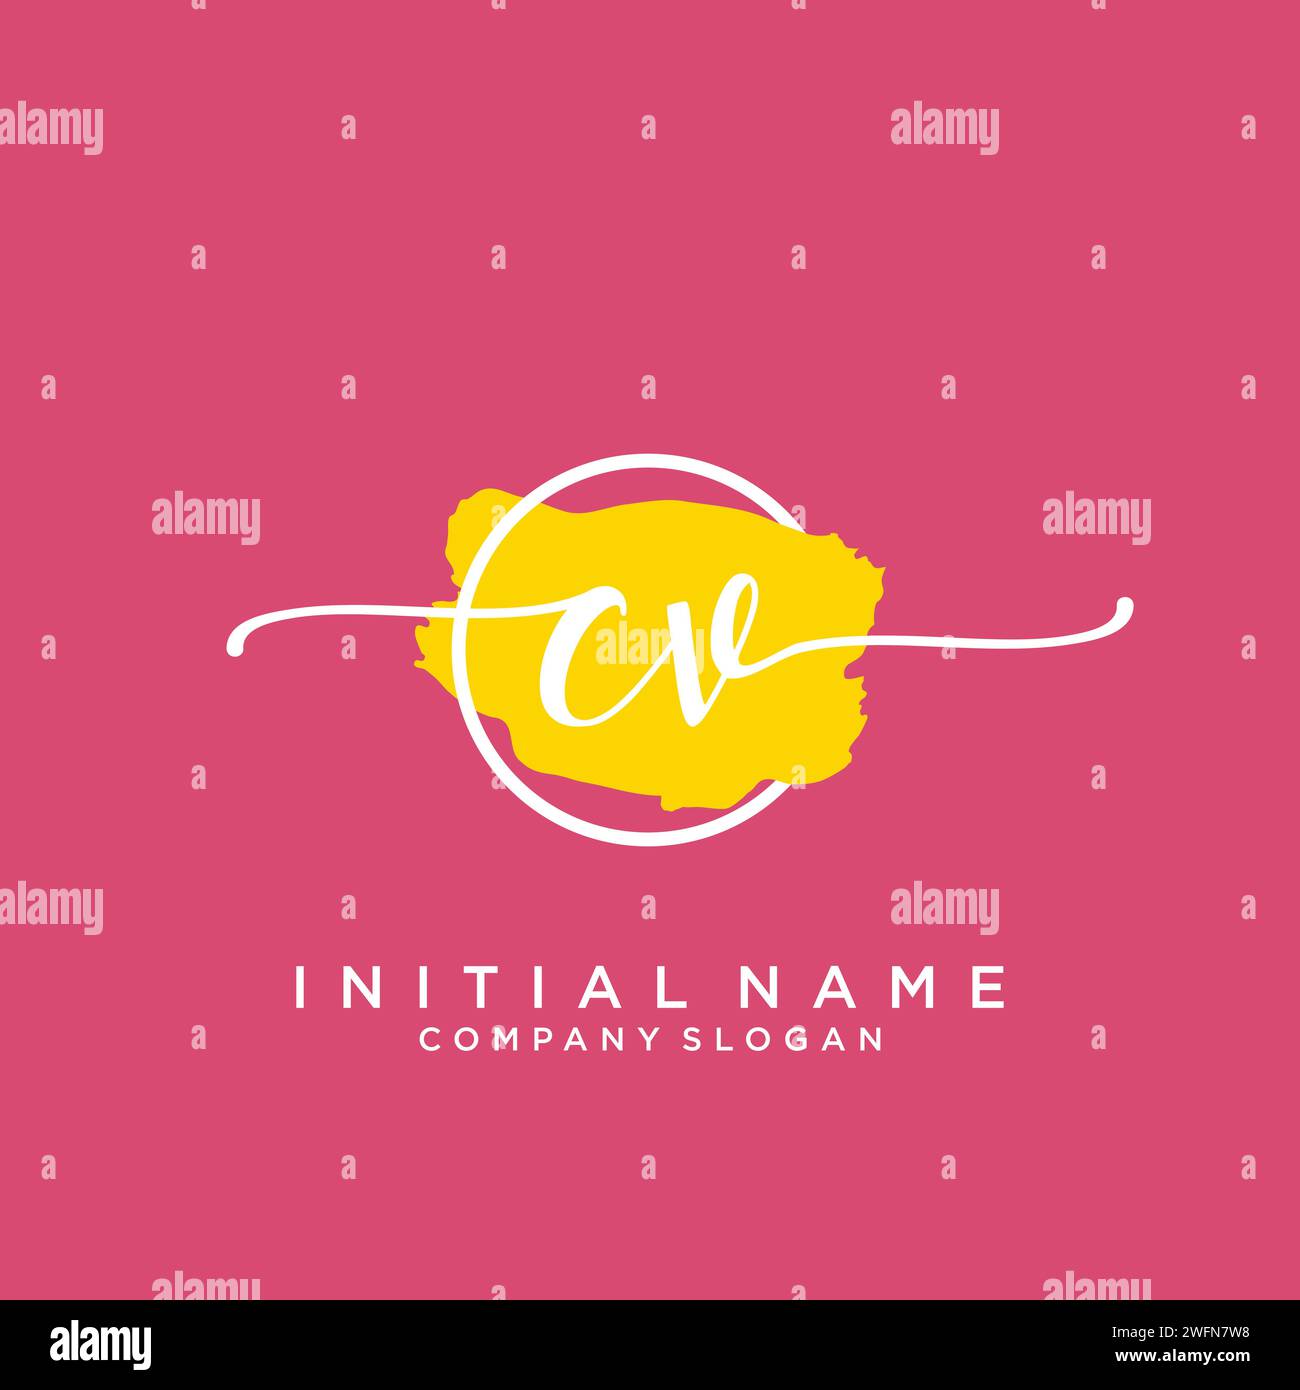 CV Initial handwriting logo with circle Stock Vector